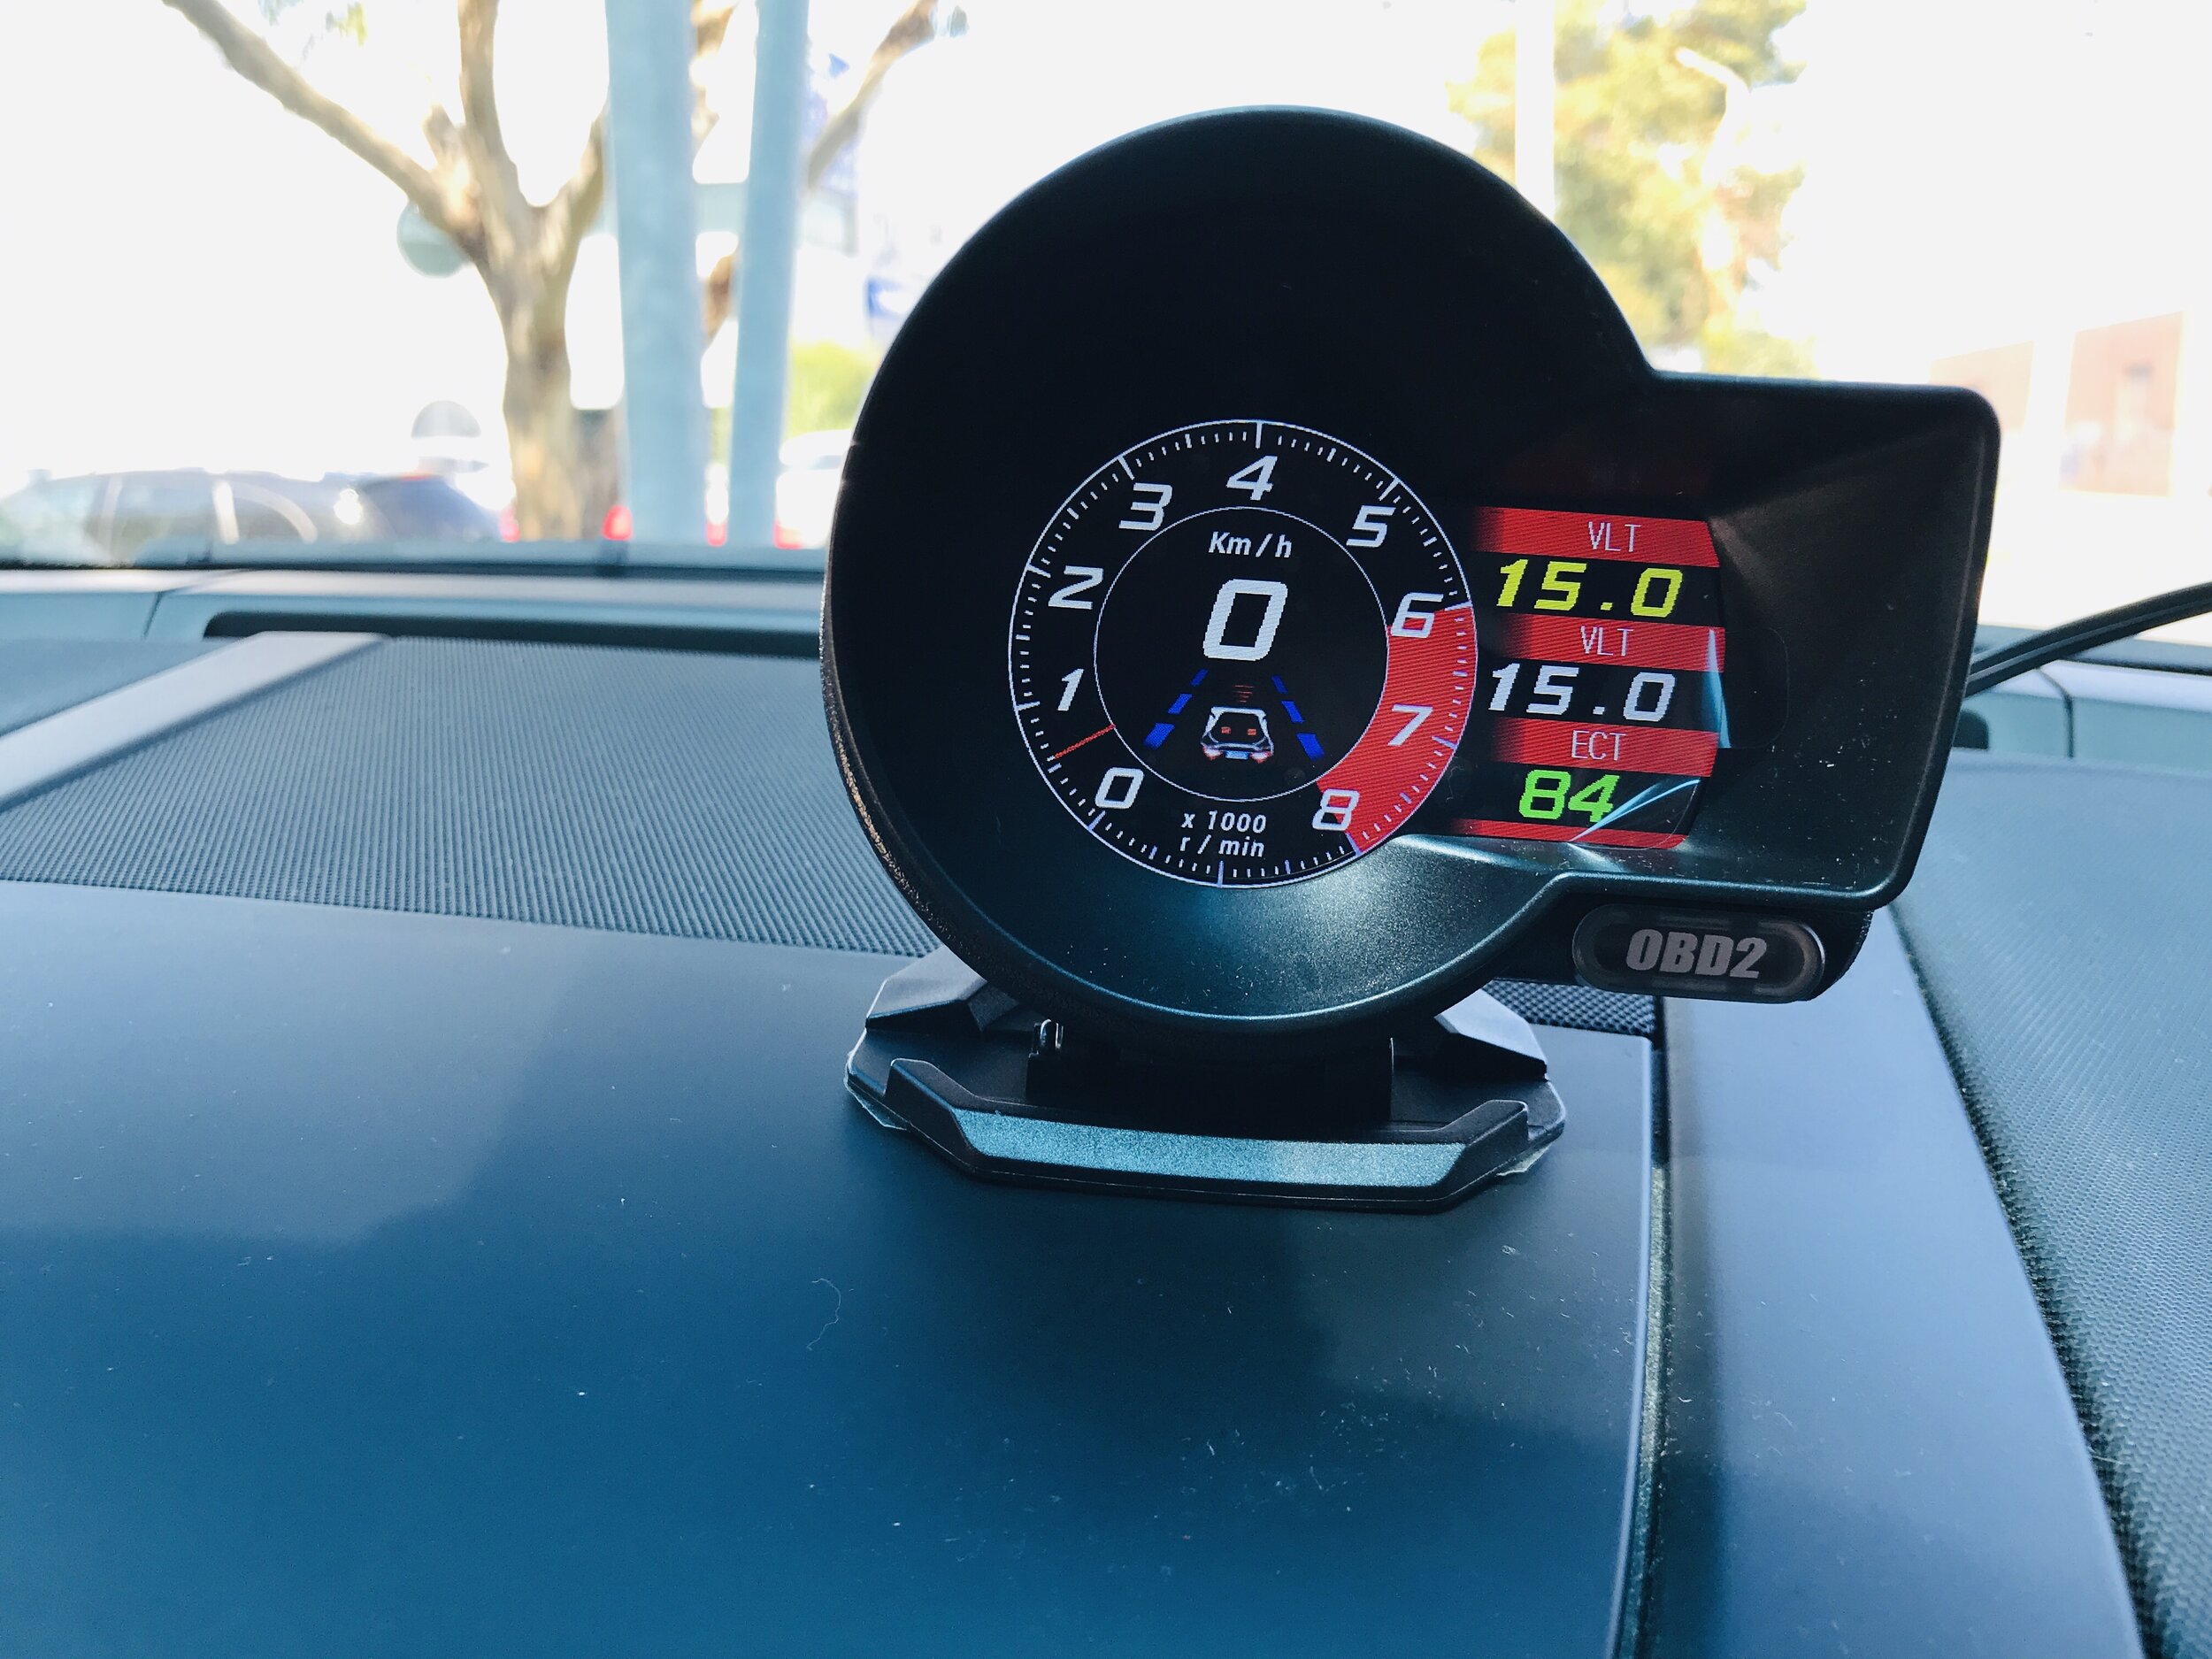 Read Data Flow Fault Alarm Fault Clearing Car HUD Gauge Smart Digital Meter Speedometer High Definition Multifunction Meter Alarm Function for Vehicle with OBDII Standard 